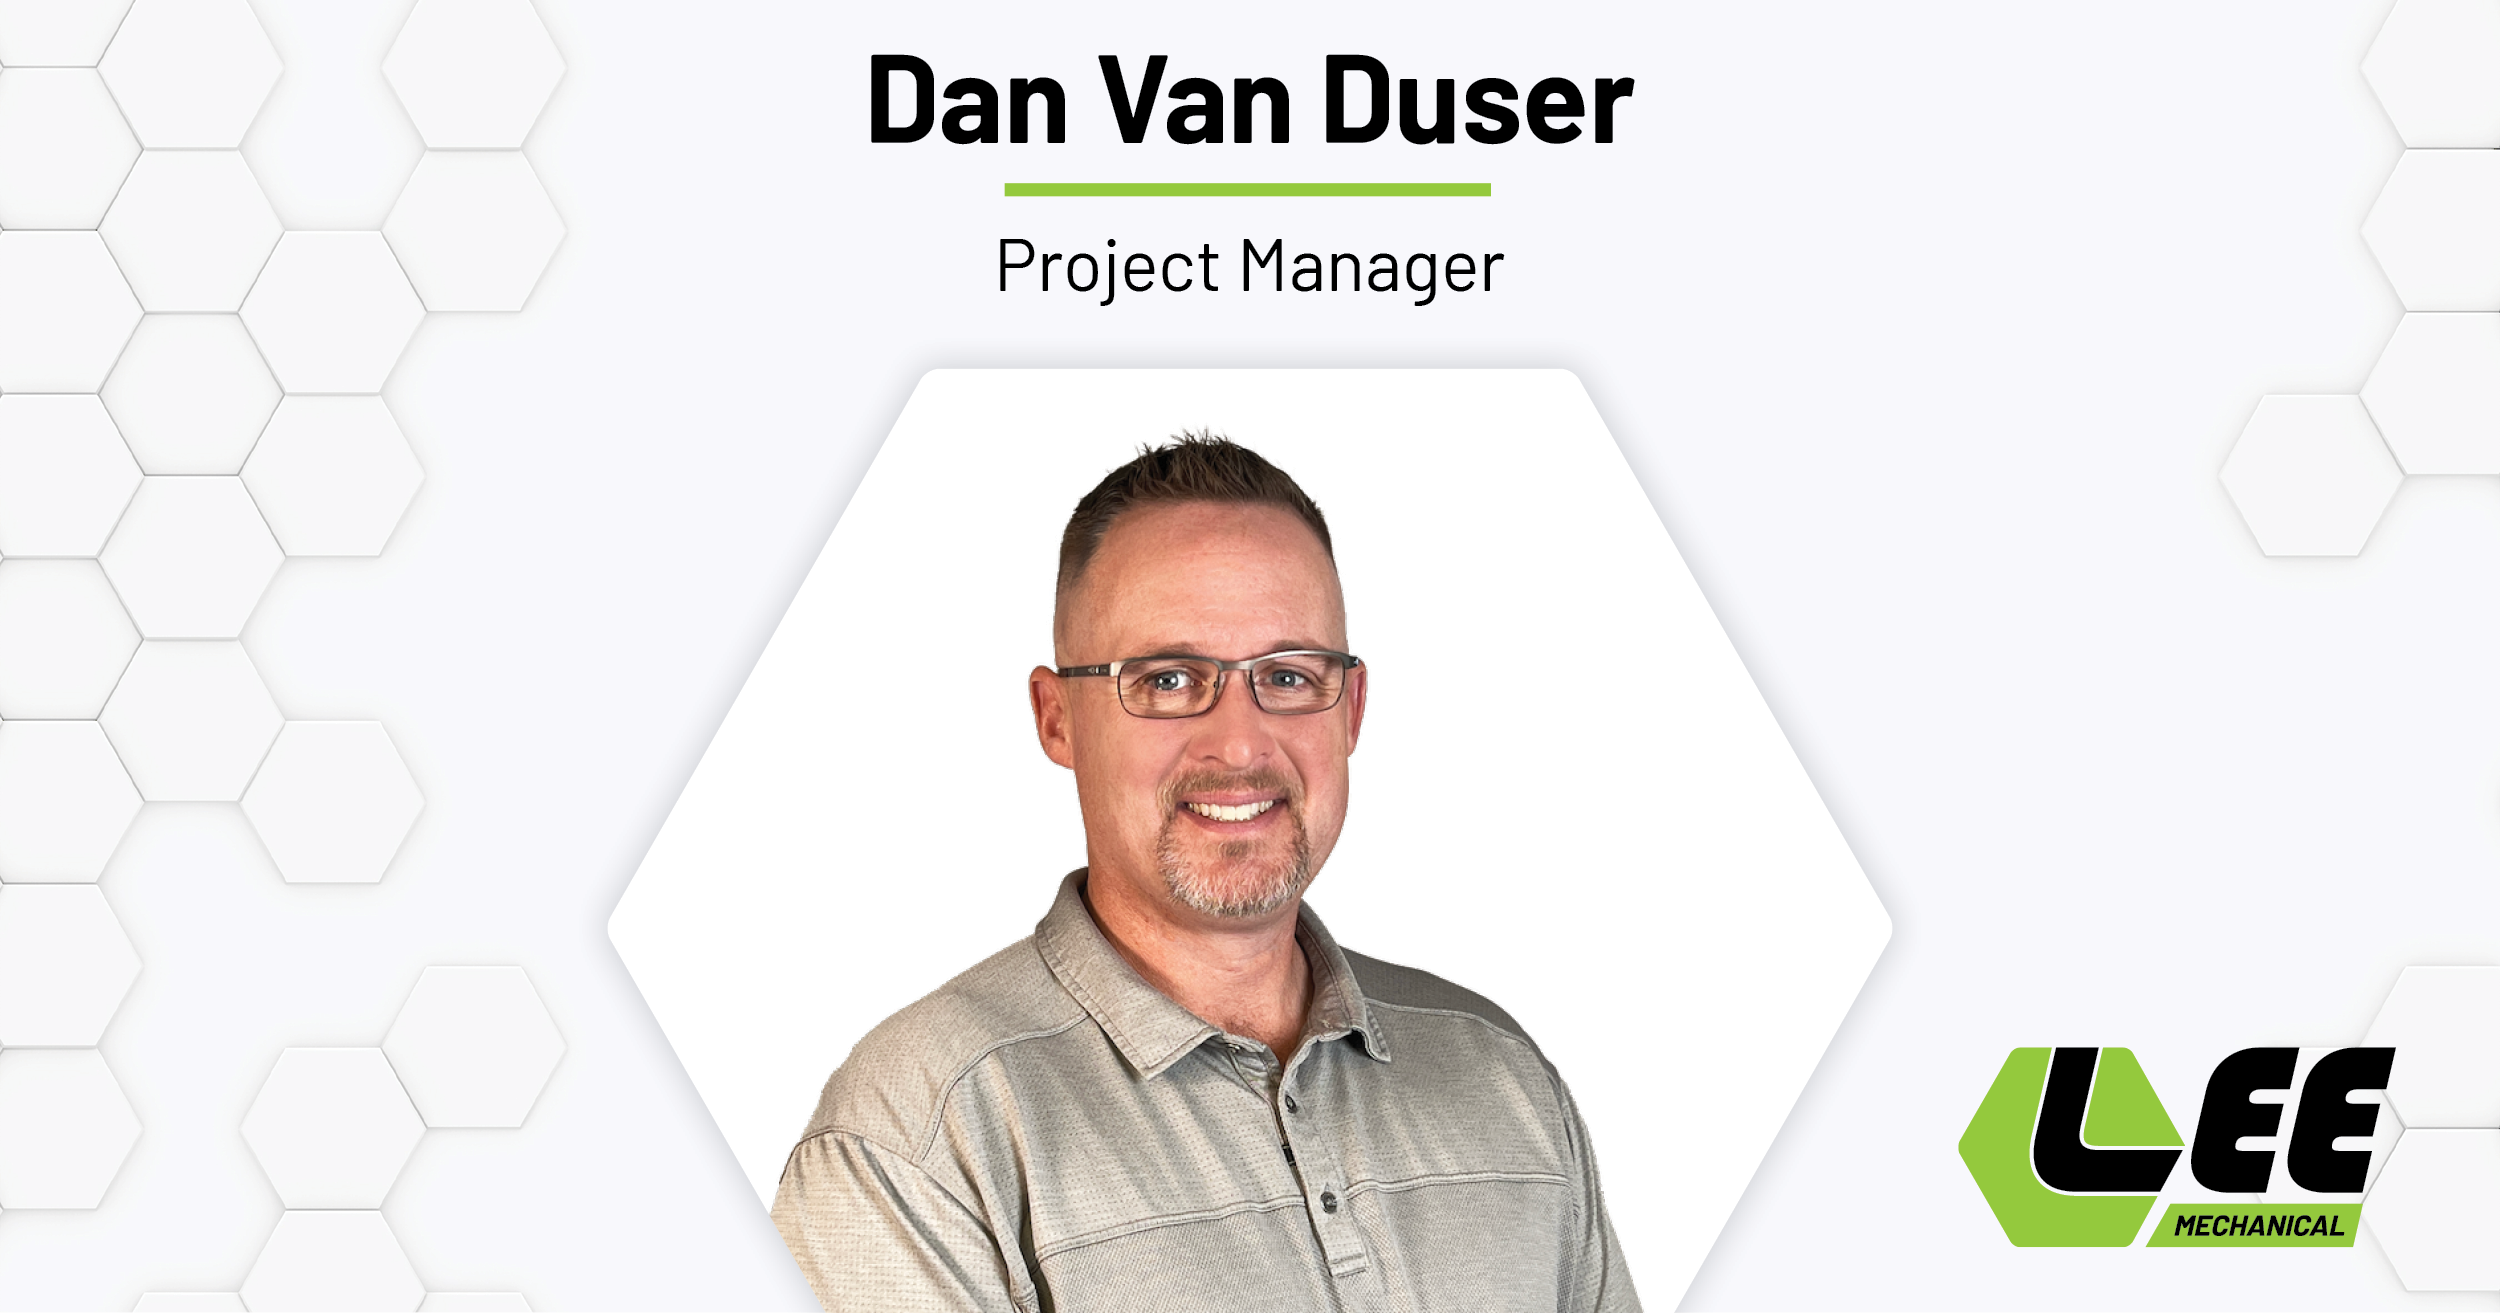 Dan Van Duser